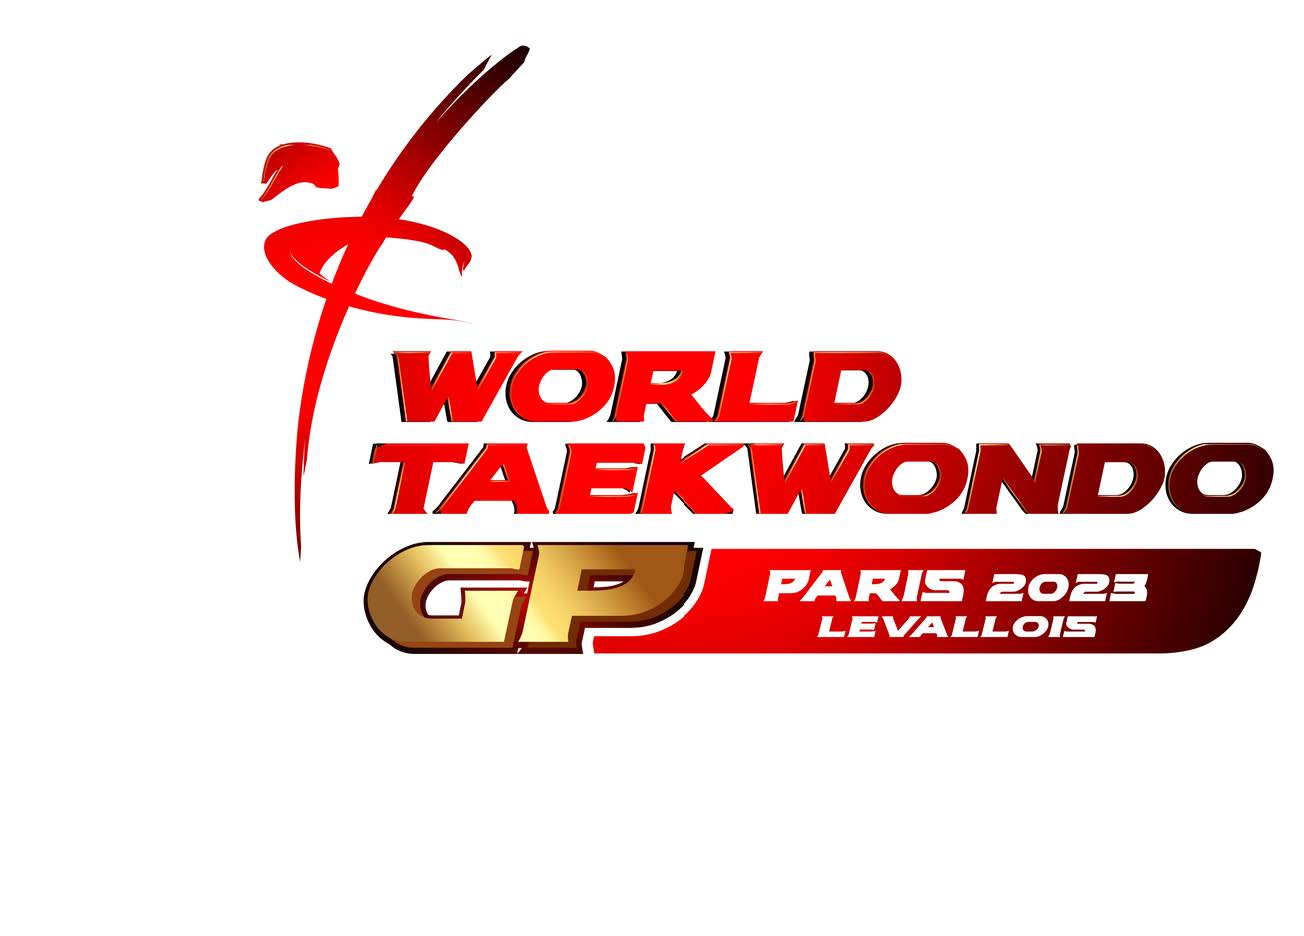 Paris 2023 World Taekwondo Grand Prix